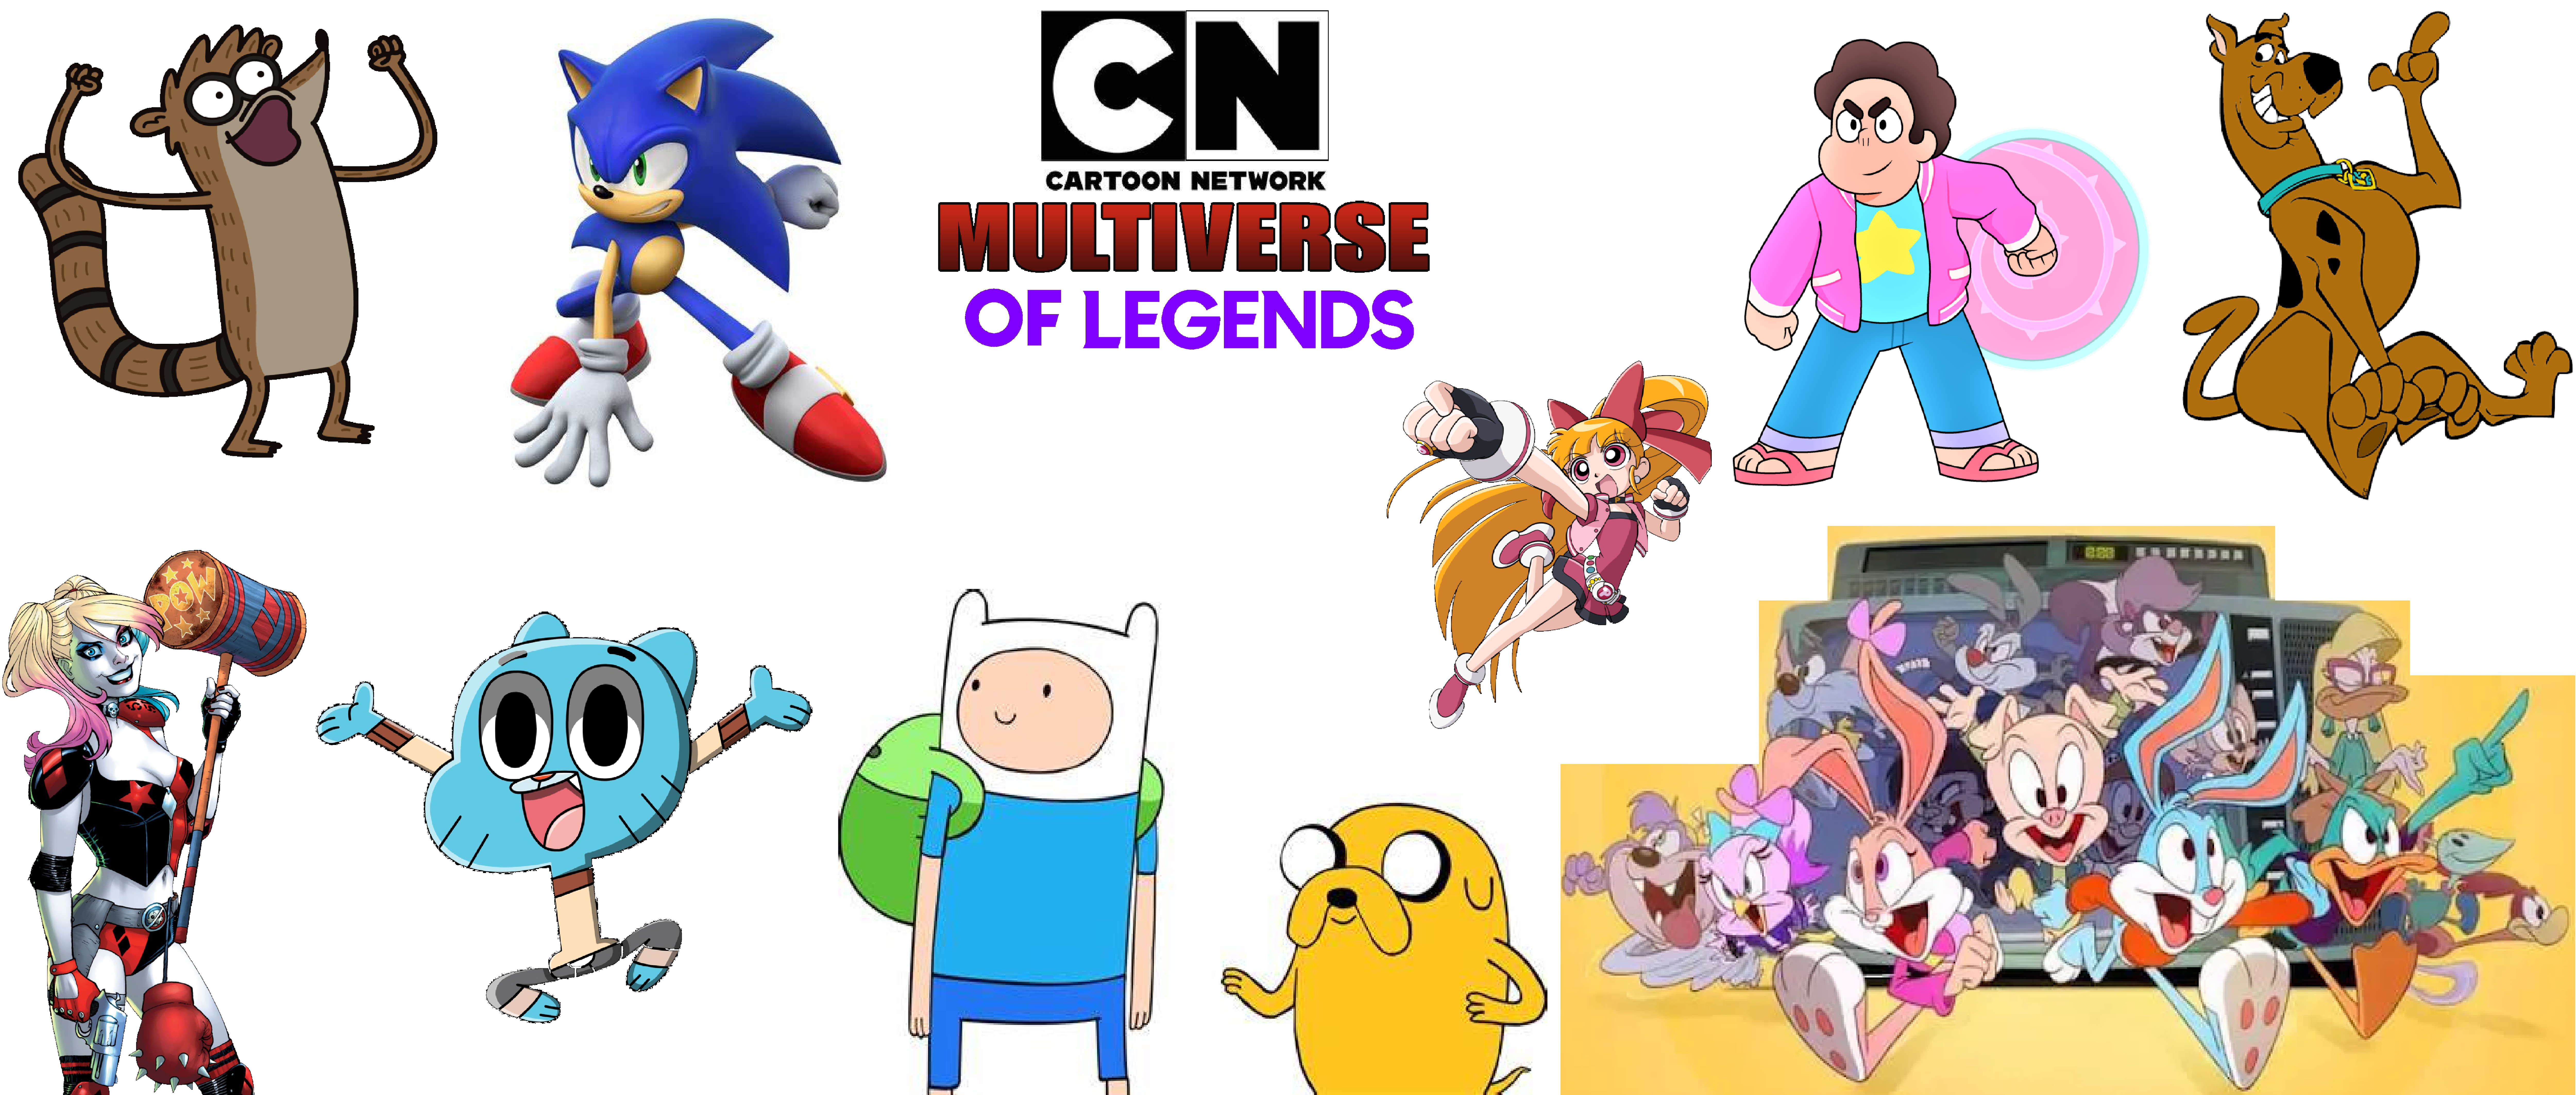 Cartoon Network Multiverse of Legends, Wiki Fanmade Video Games